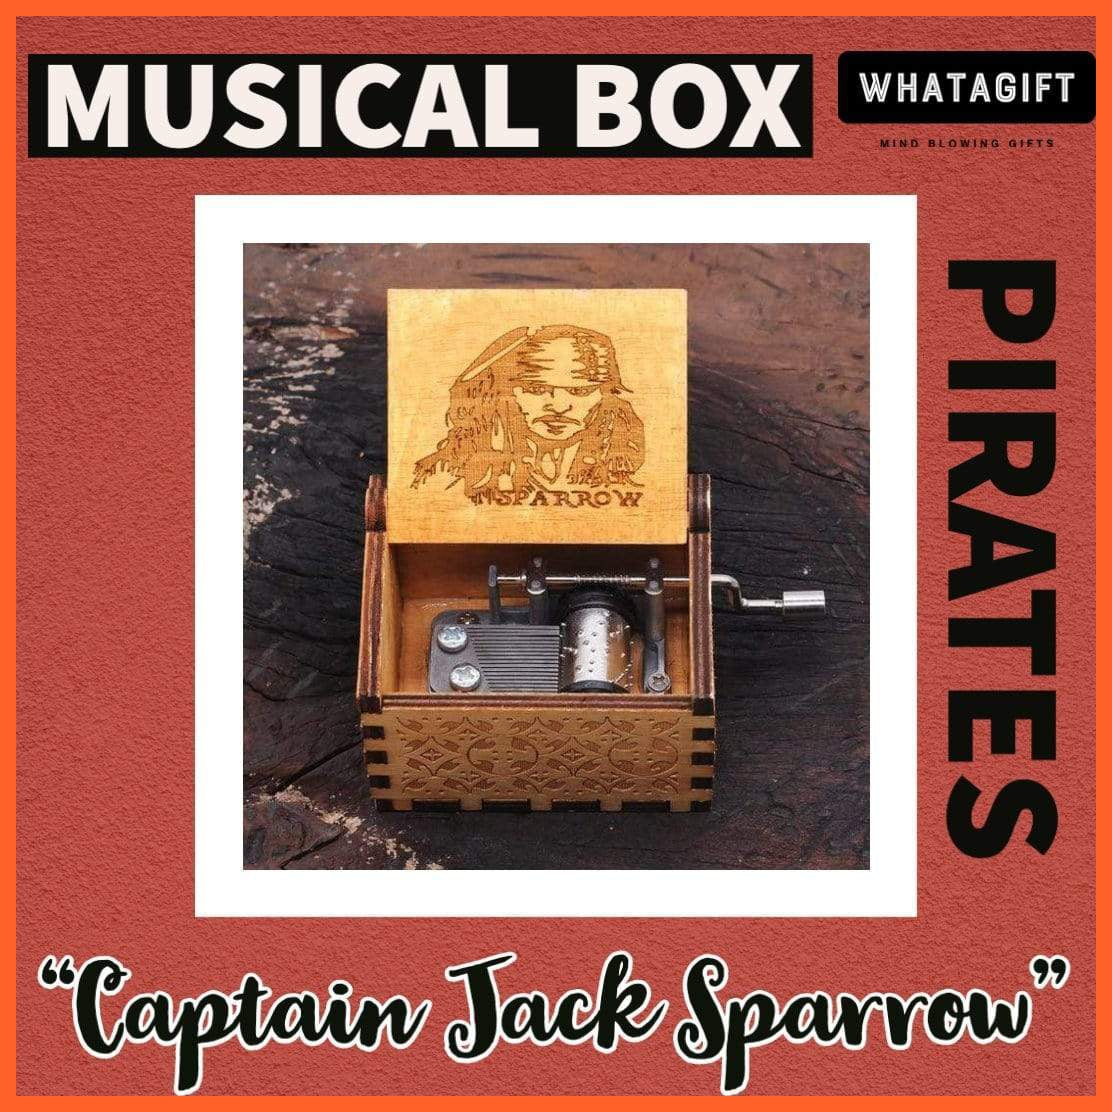 Wooden Classical Music Box Tune Captain Jack Sparrow | whatagift.com.au.